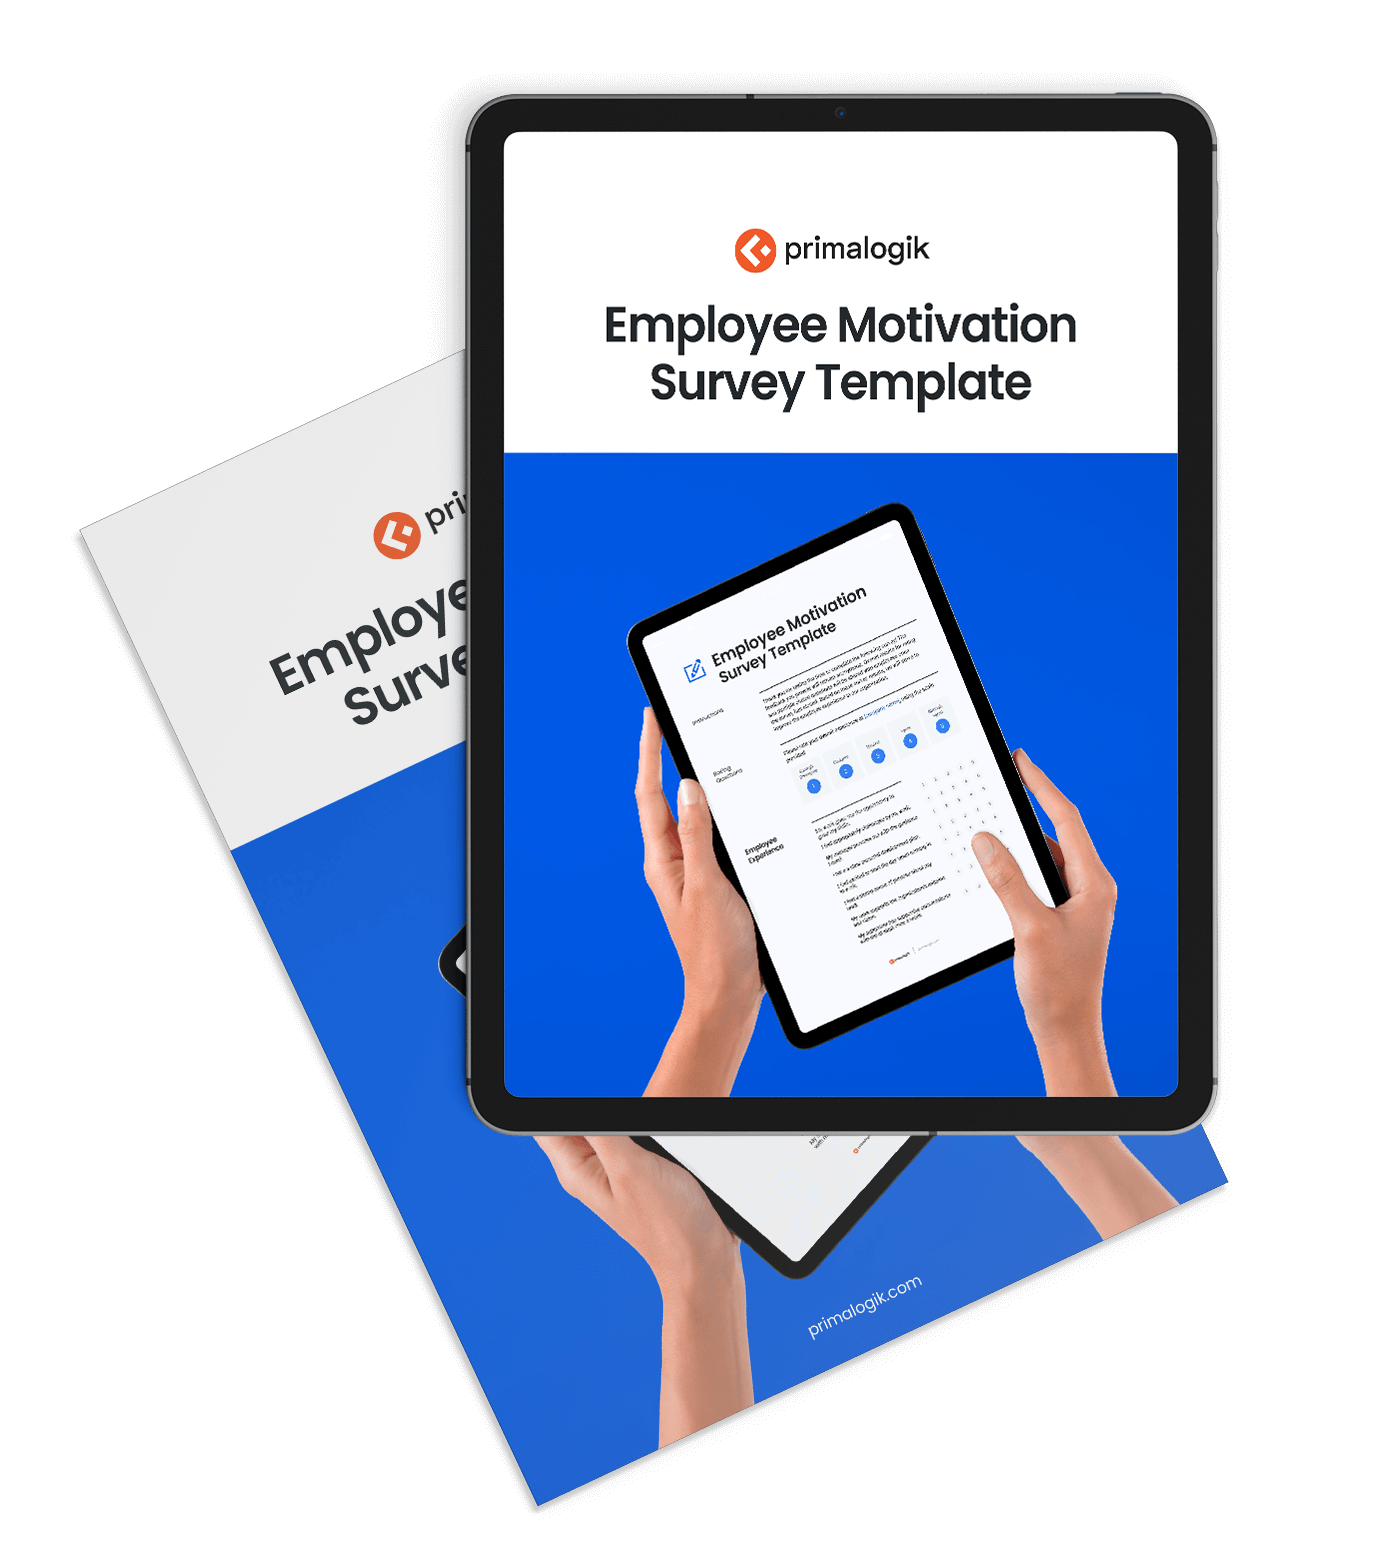 Employee Motivation Survey Template - Primalogik